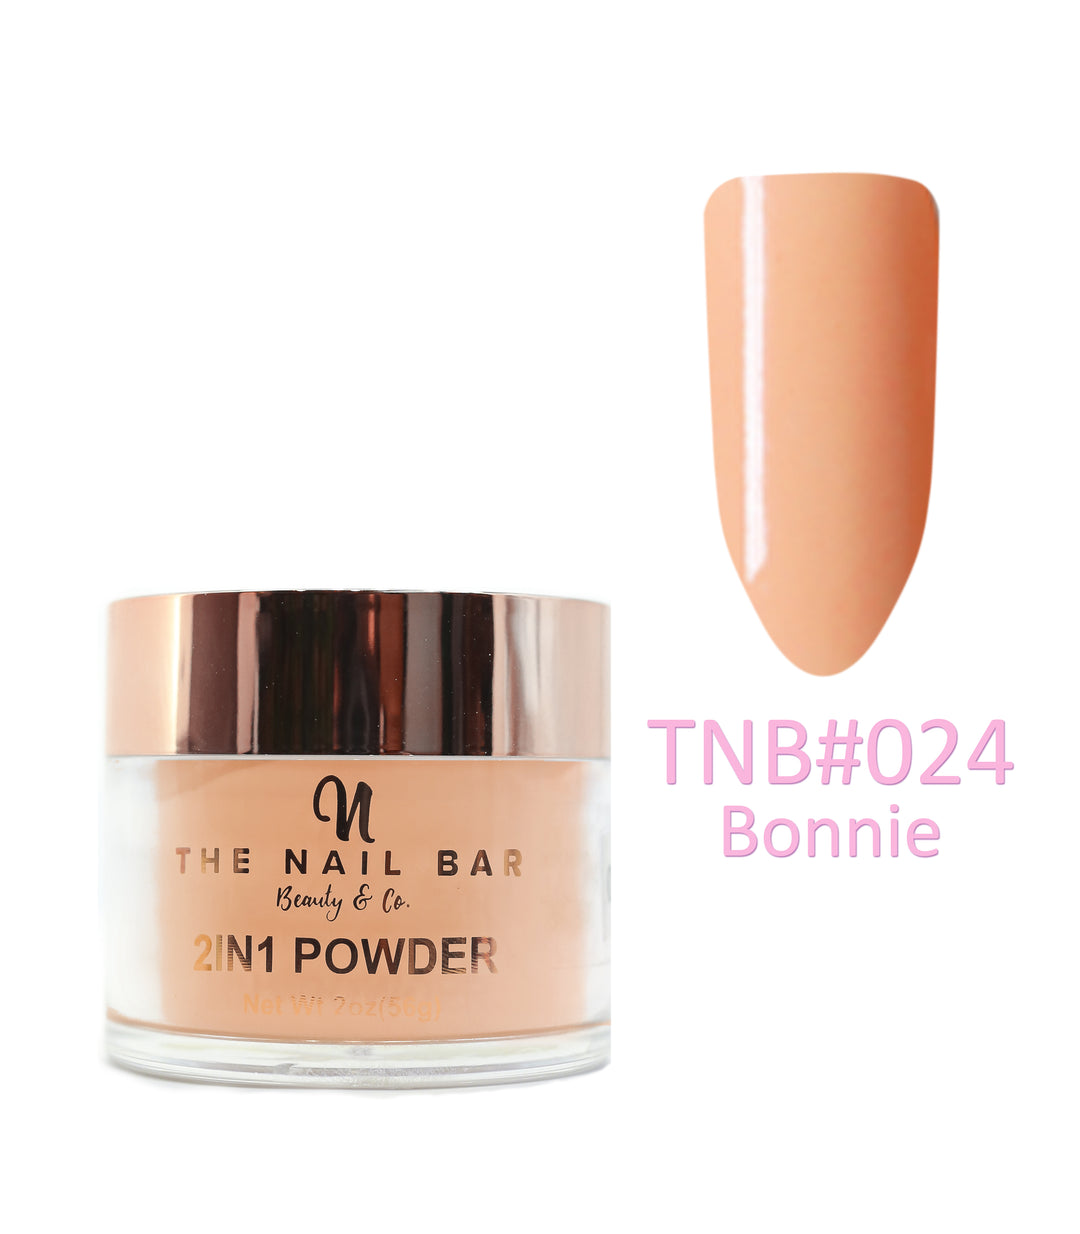 2-In-1 Dipping/Acrylic colour powder (2oz) -Bonnie - The Nail Bar Beauty & Co.